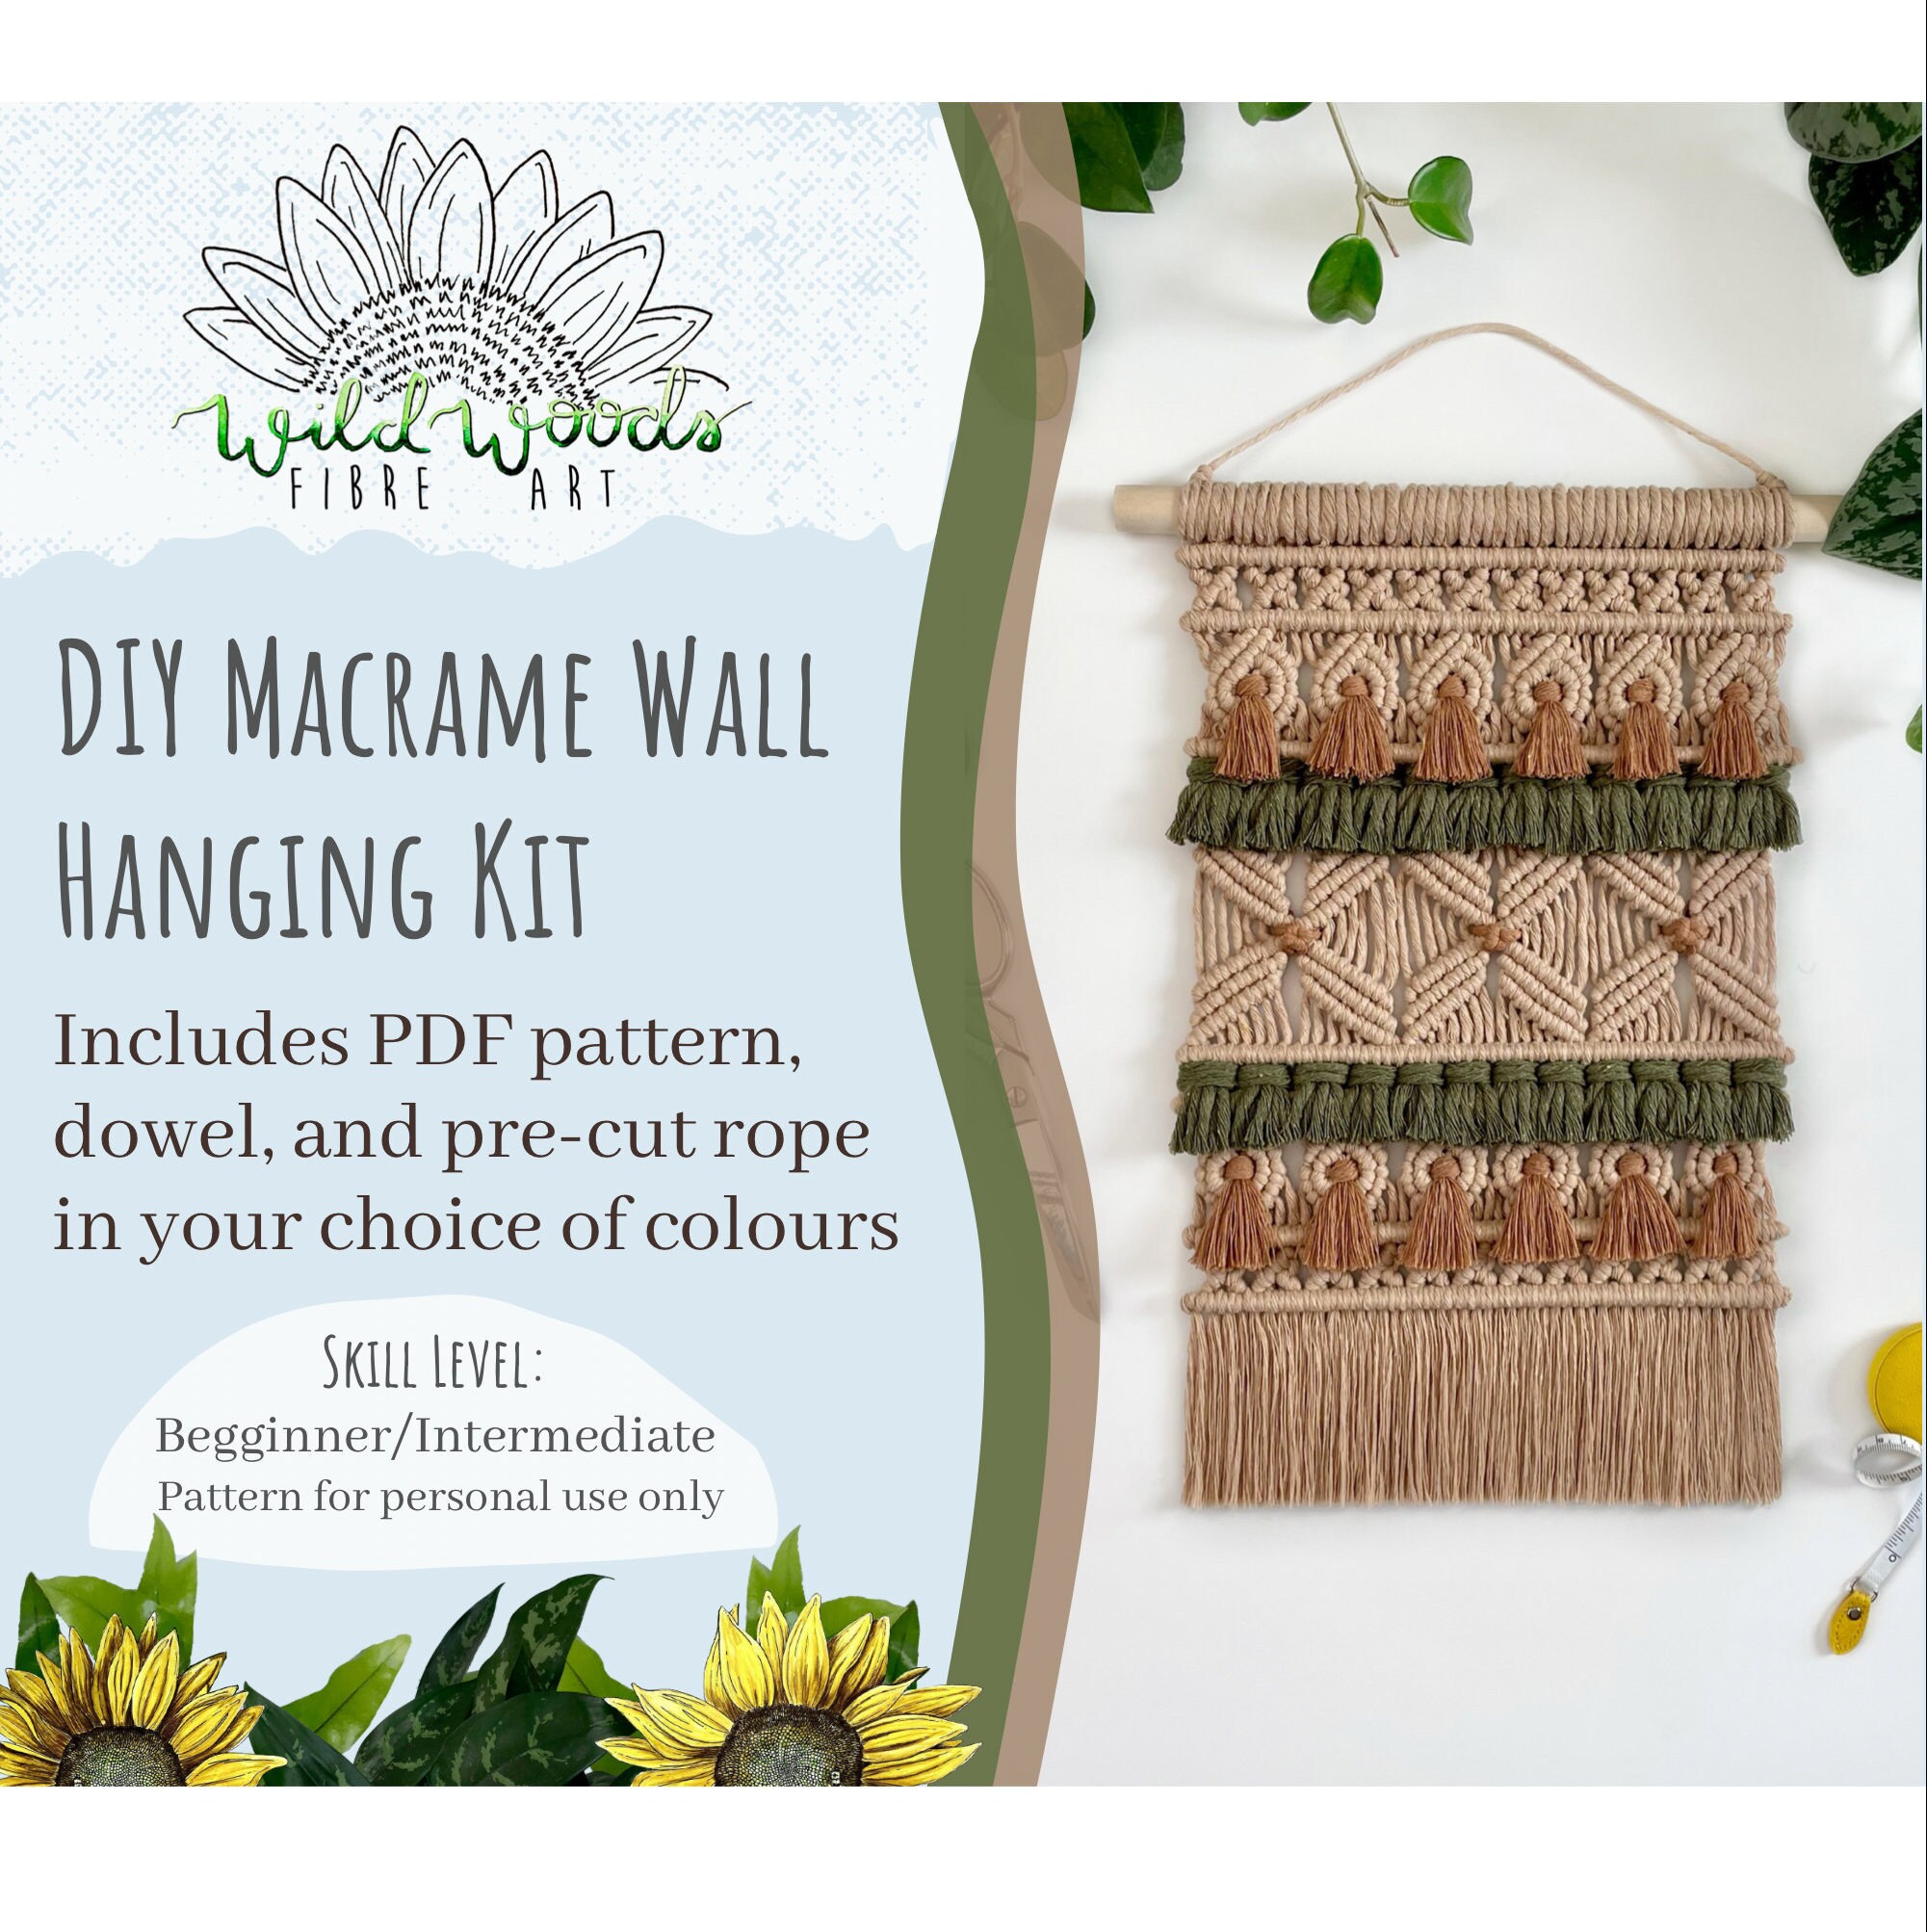 Craft Macrame Kit DIY Kit Wall Hanging Including Video Tutorial